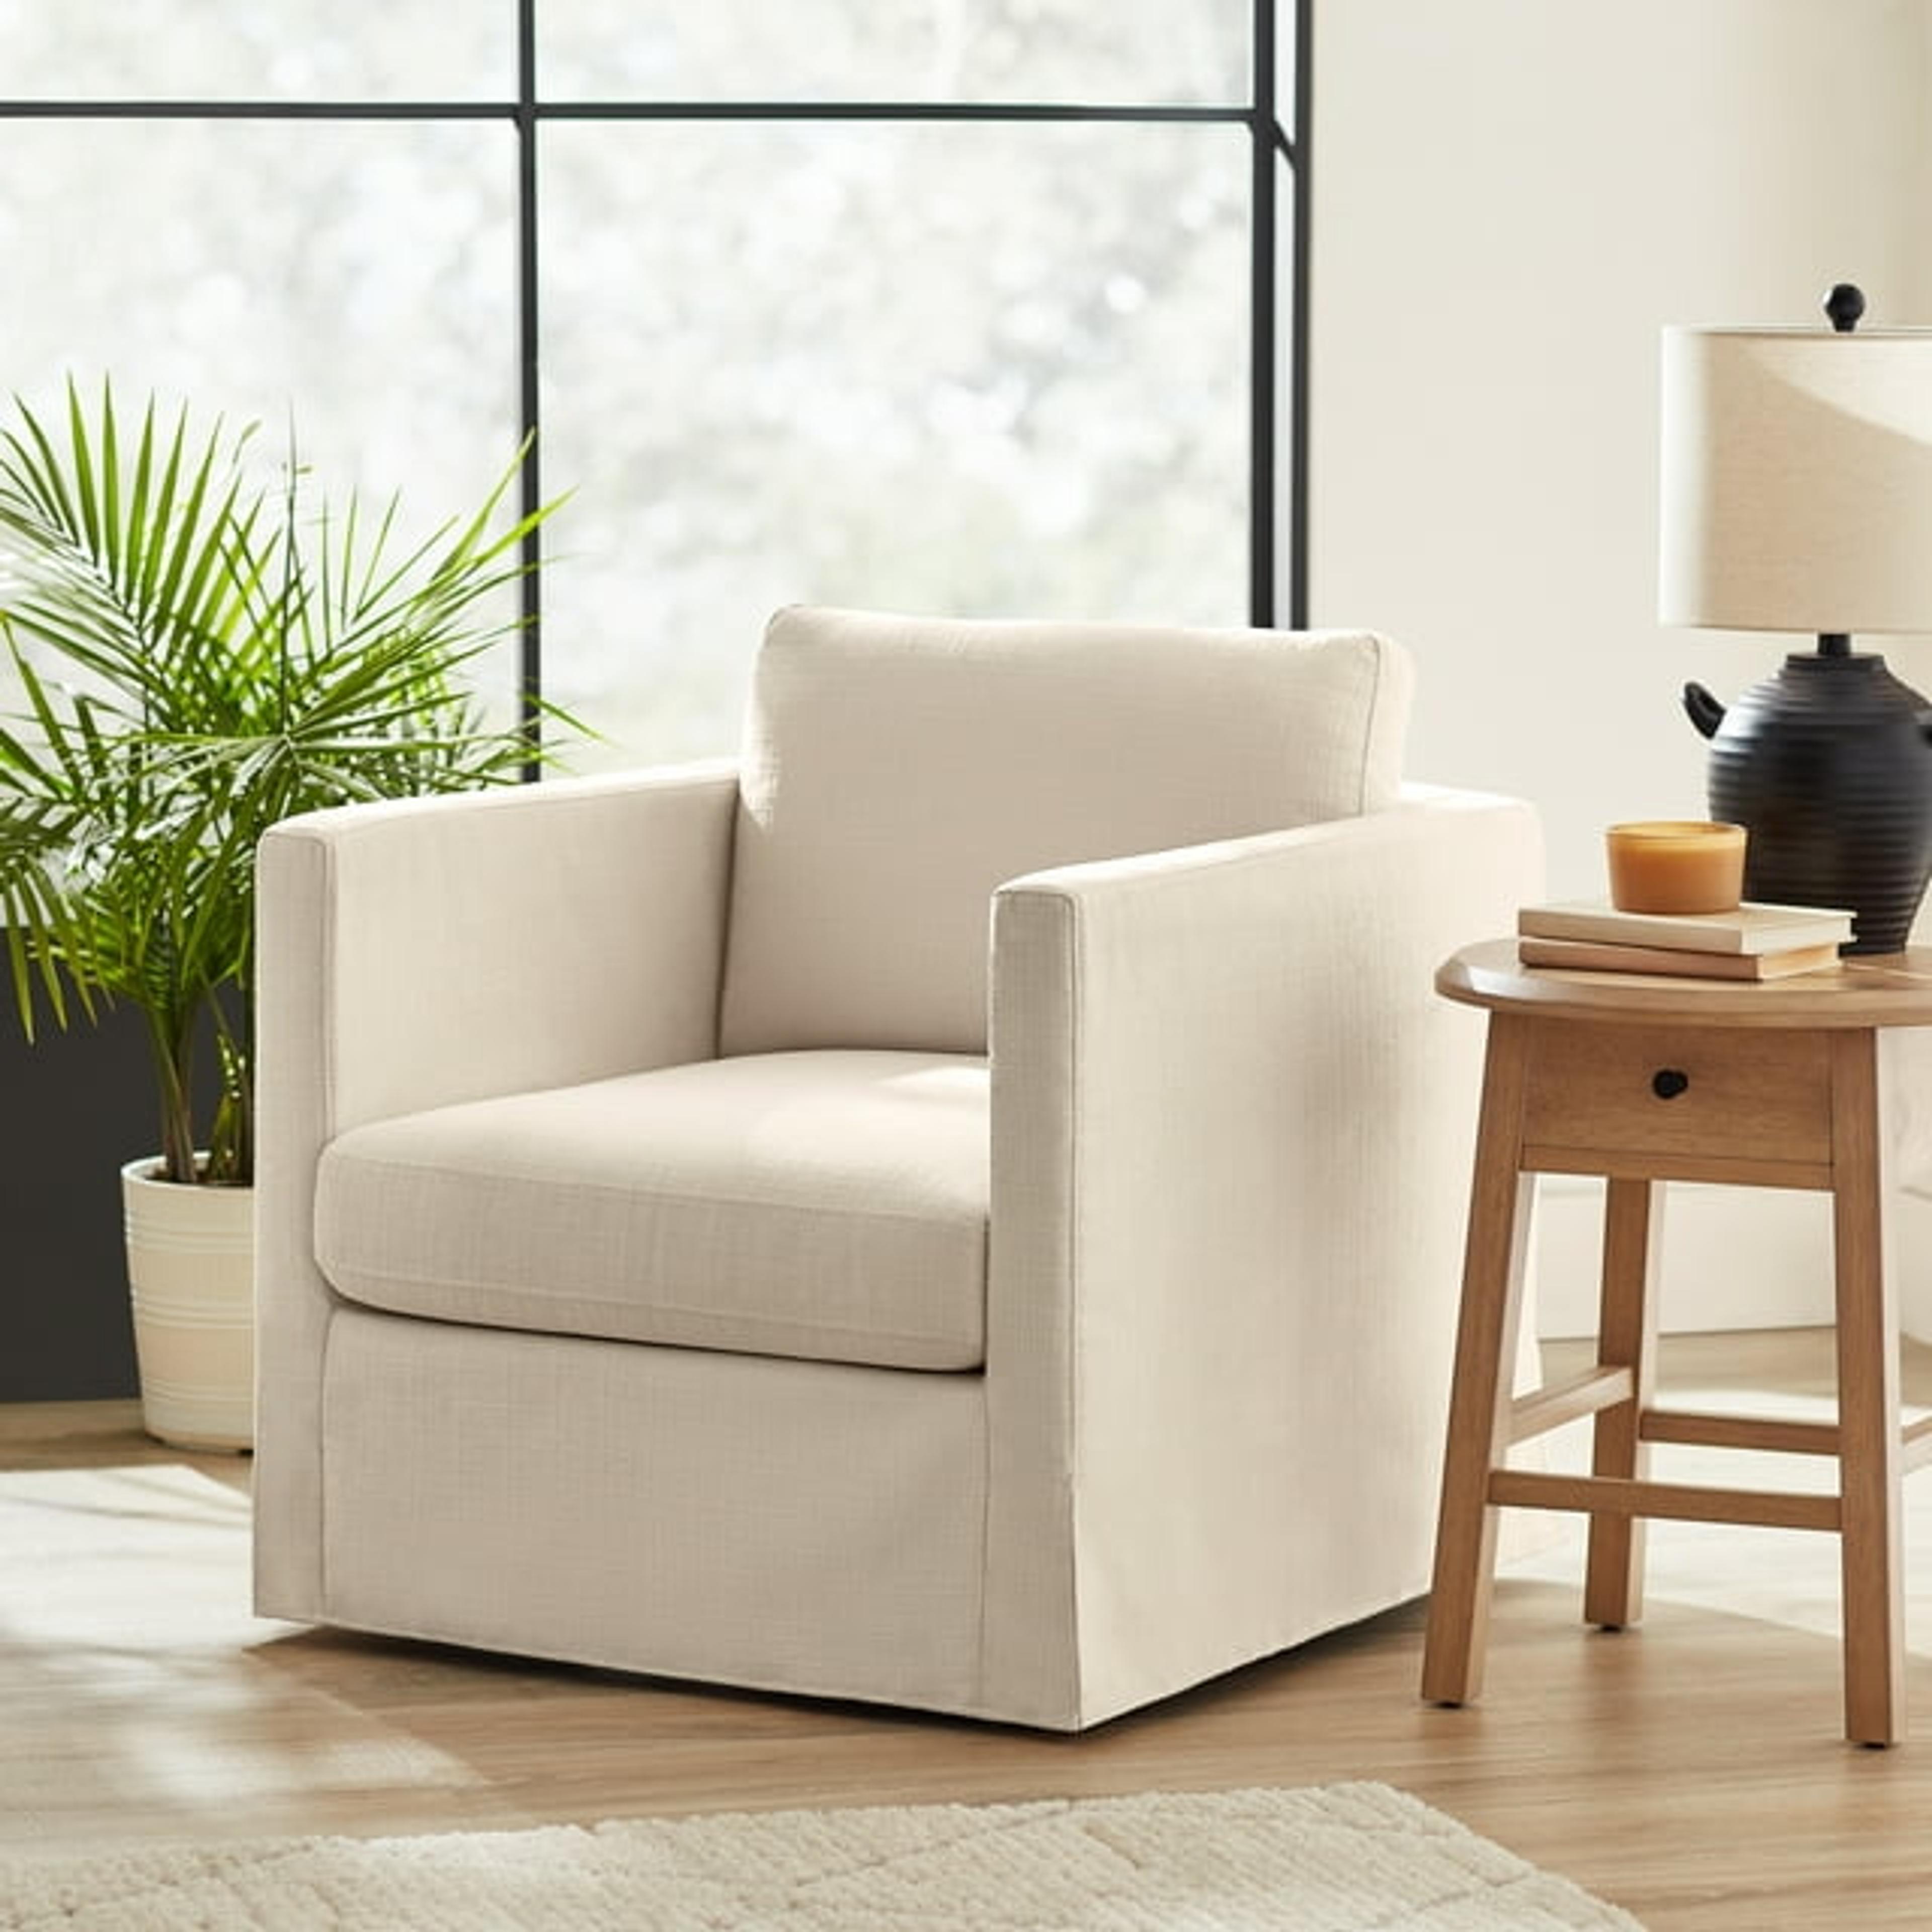 Better Homes & Gardens Waylen Slipcover Swivel Chair, Cream, by Dave & Jenny Marrs - Walmart.com